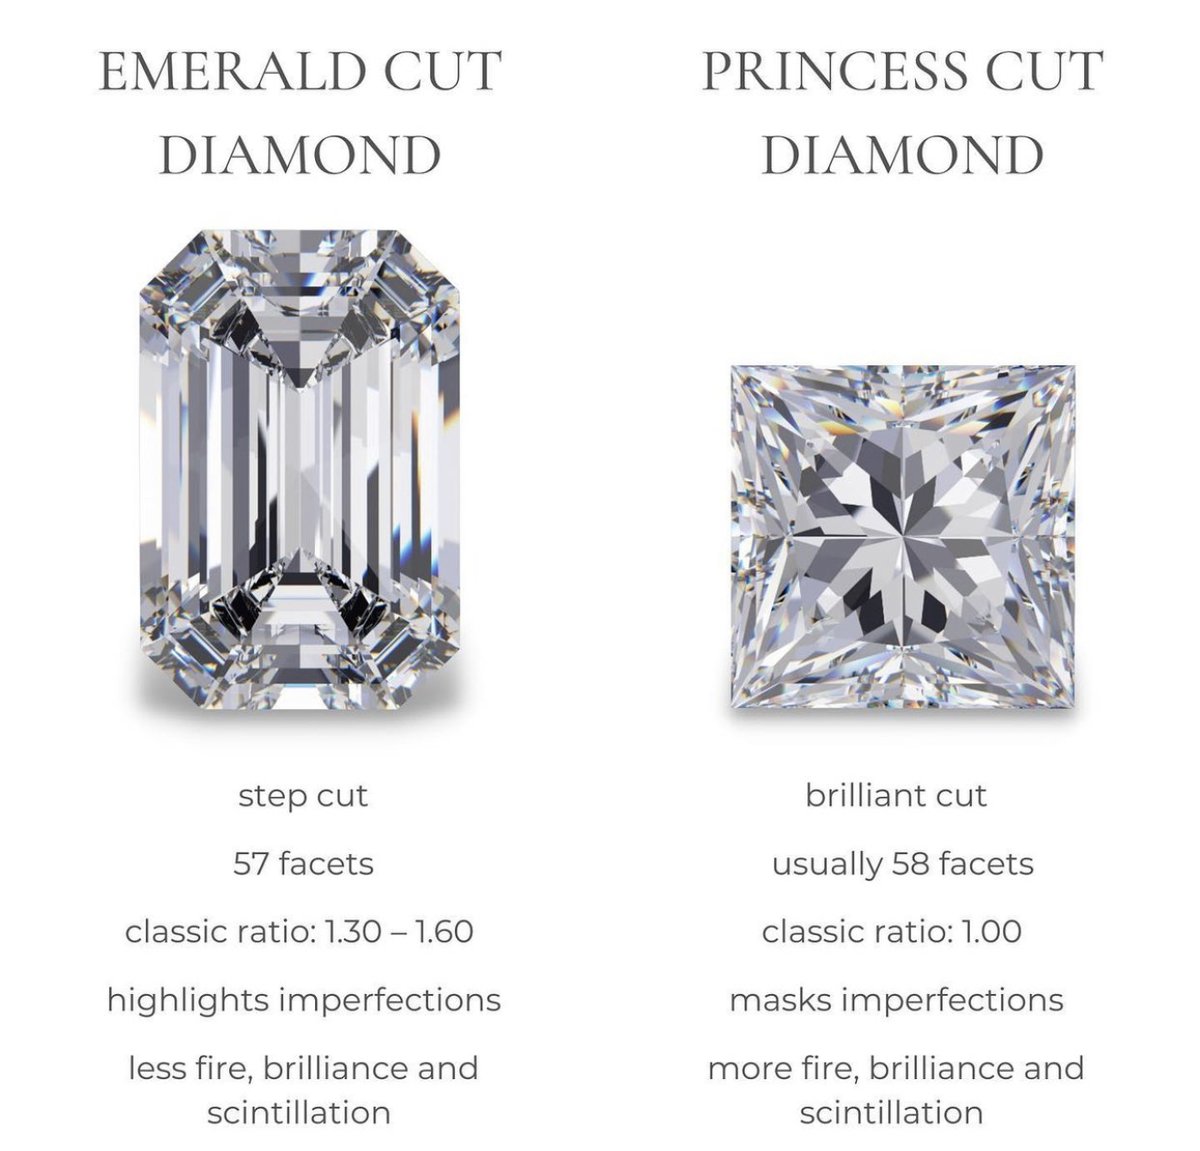 Diamond shape education:
Things to know when buying a diamond. 
-
-
-
#regardjewelry #diamondlover #diamondeducation #jewelrydesigner #jewelry #jewelryofaustin #austinscoolestjeweler